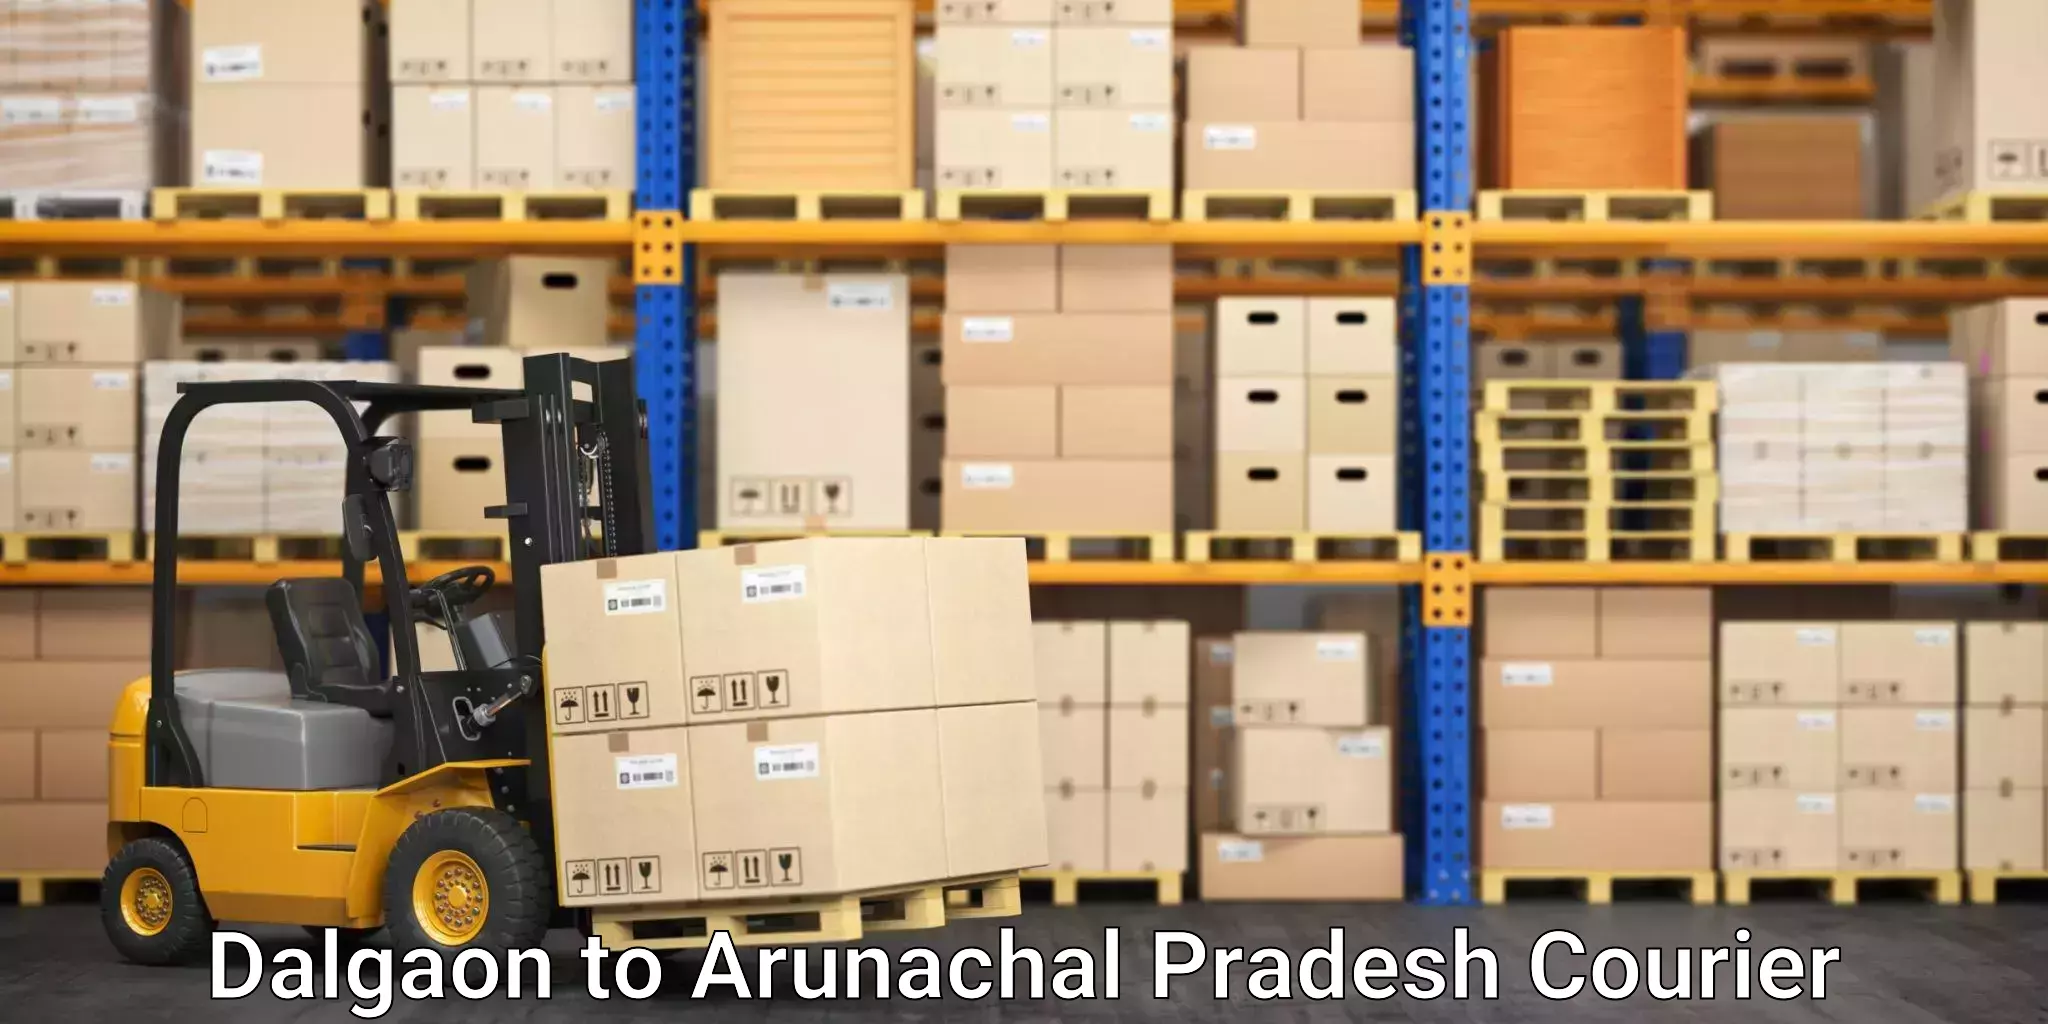 High-performance logistics Dalgaon to Arunachal Pradesh